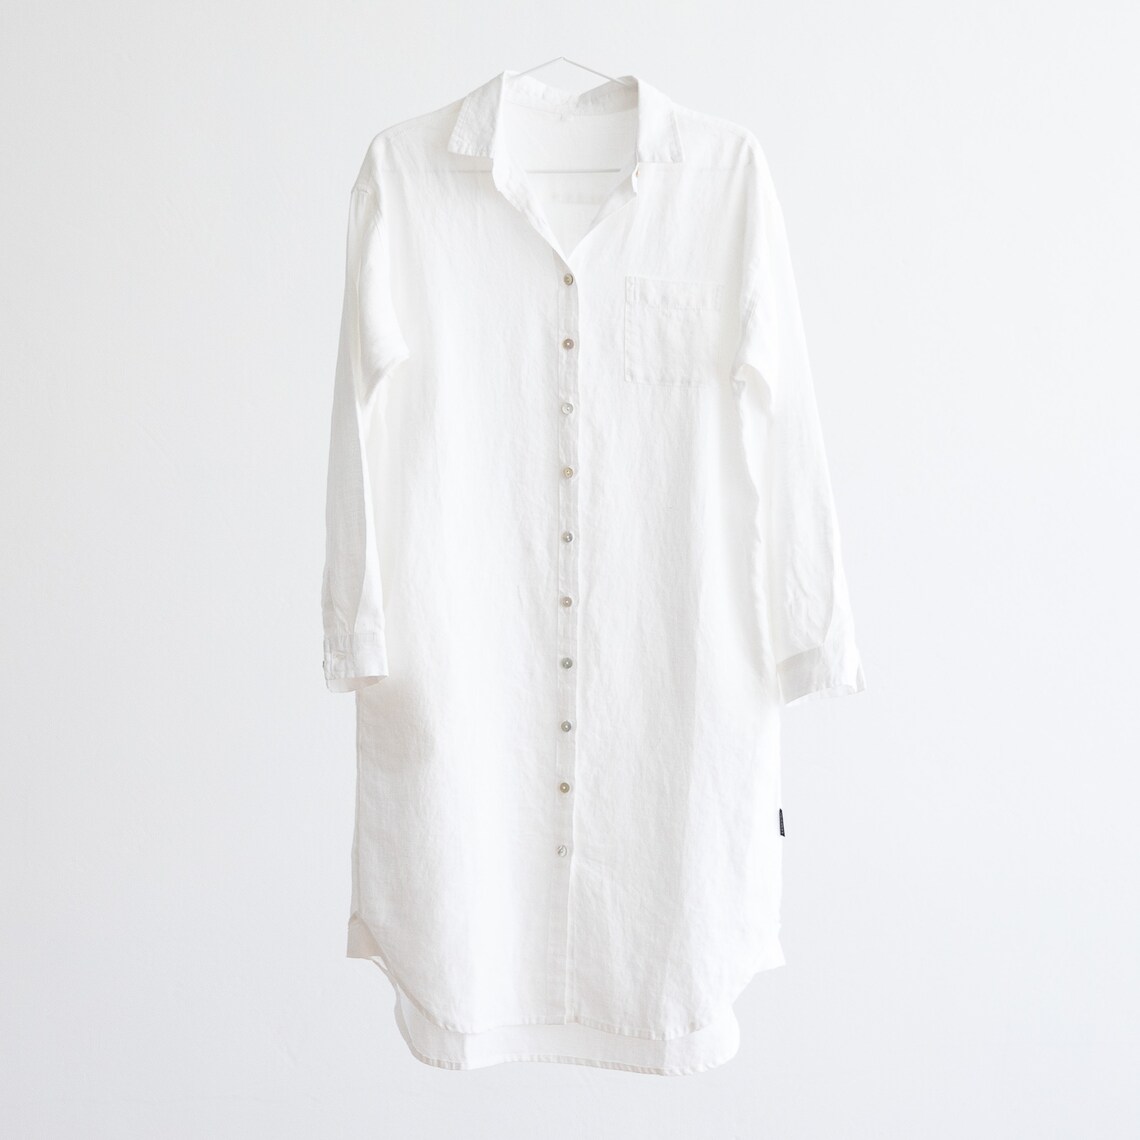 Linen Shirt Dress Various Colors. Front full-length buttoned | Etsy